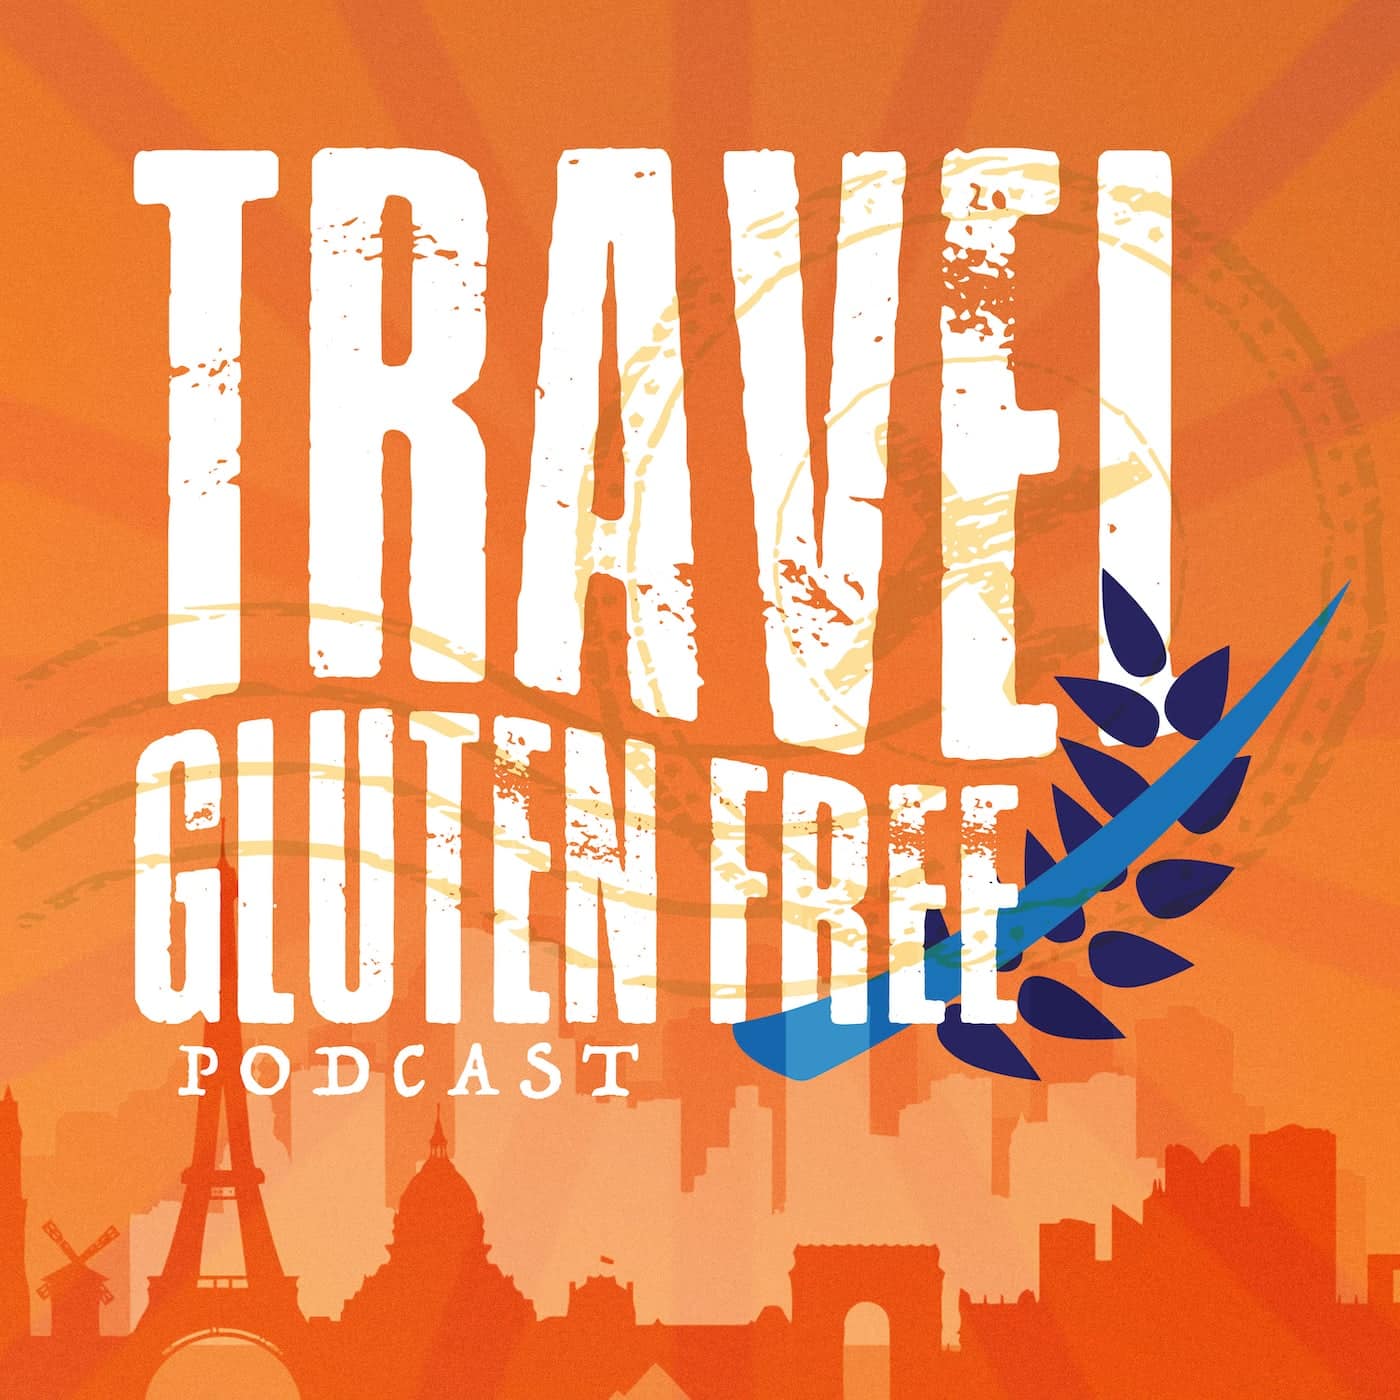 Bonus Podcast – Tim Pickett on the Travel Gluten Free Podcast